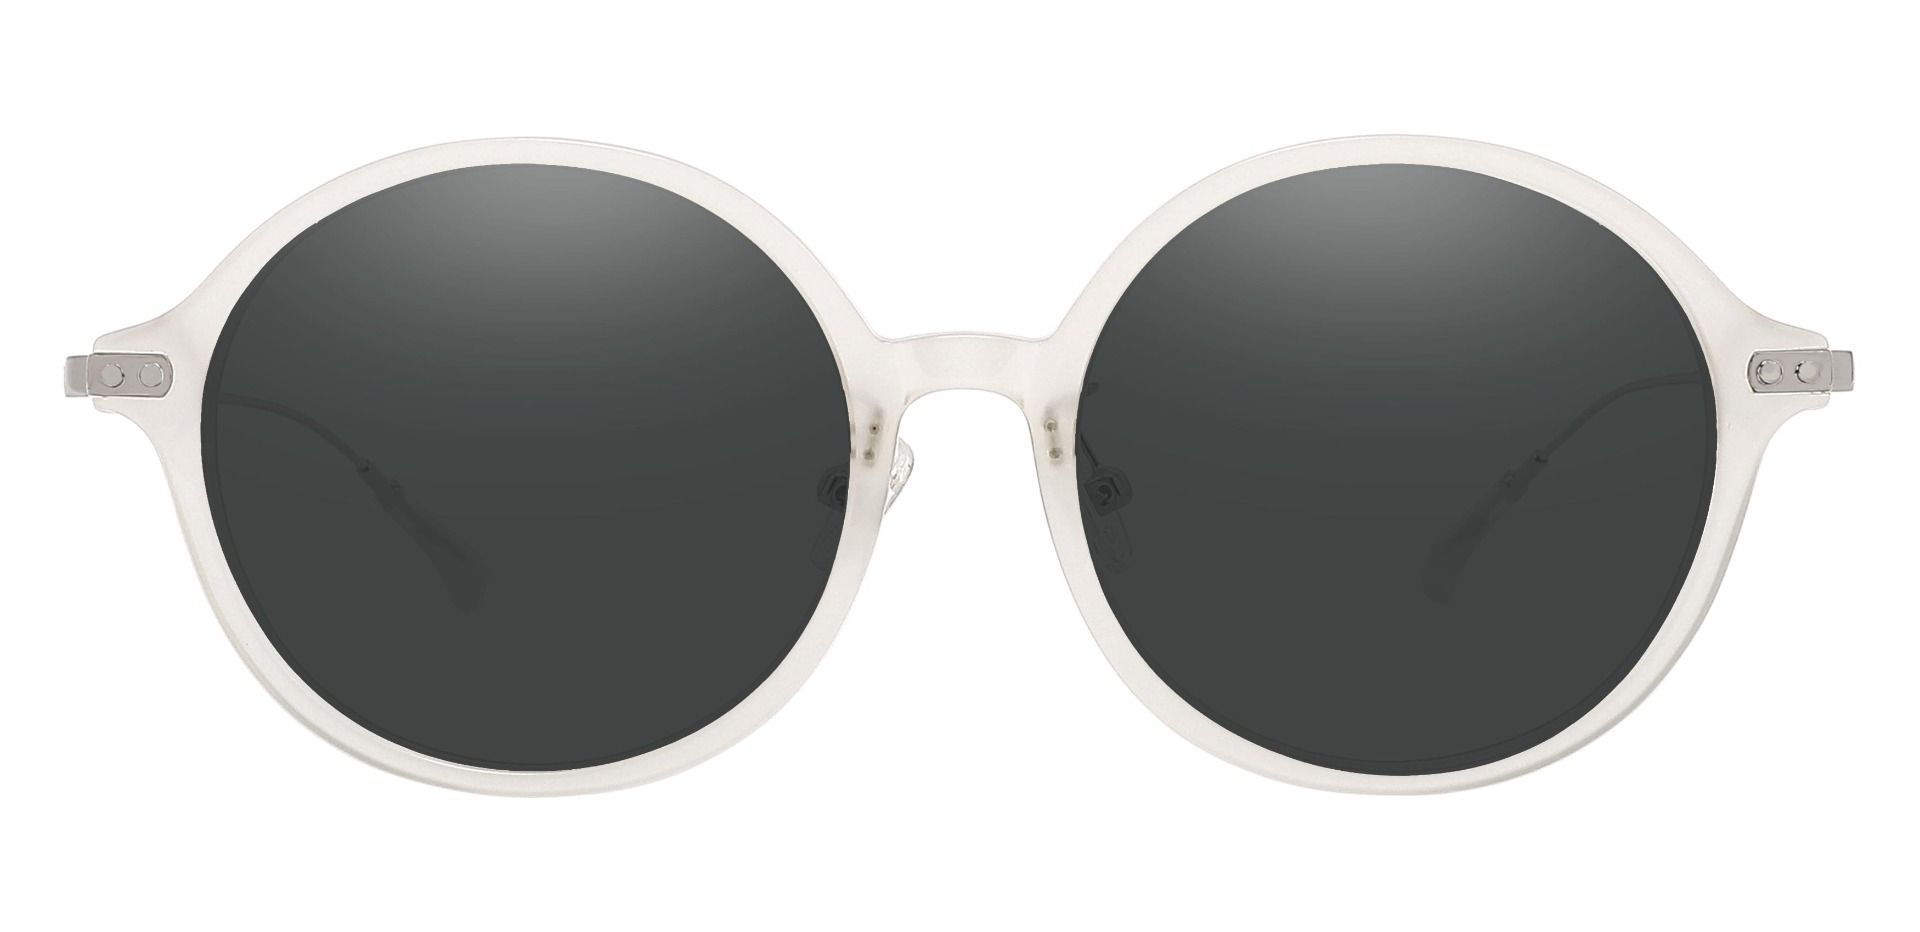 Princeton Round Prescription Sunglasses - Clear Frame With Gray Lenses